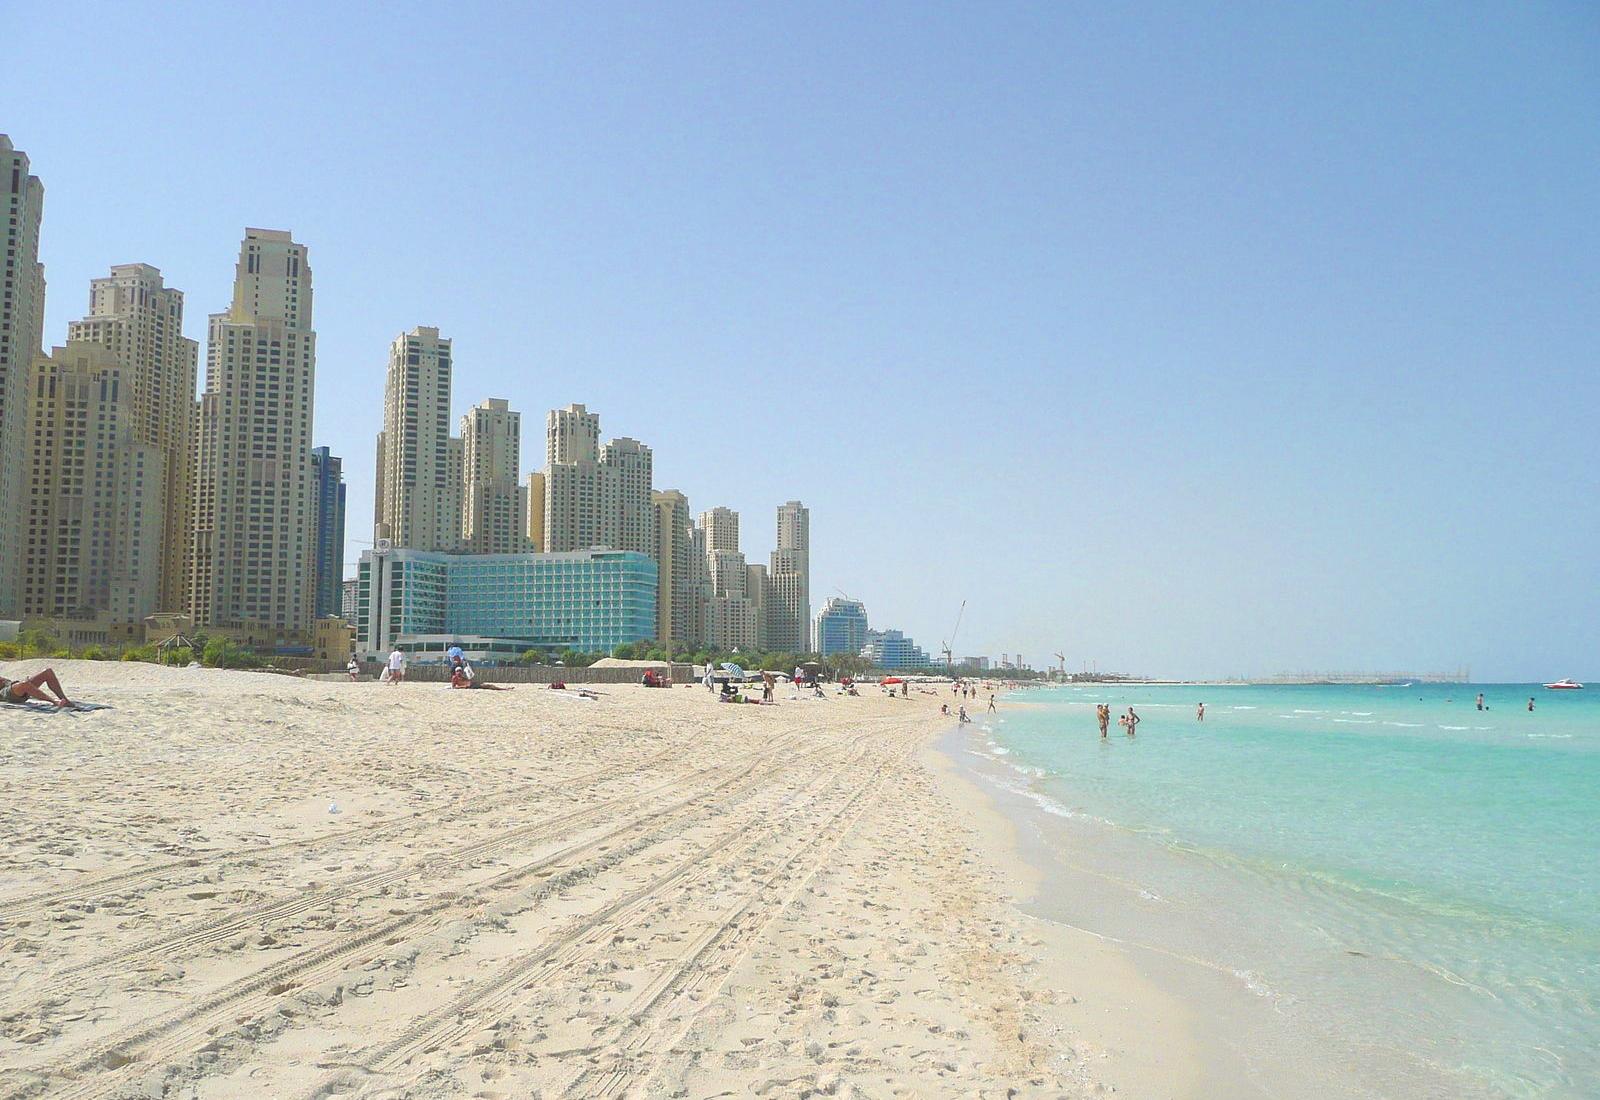 Sandee - Jebel Ali Open Beach